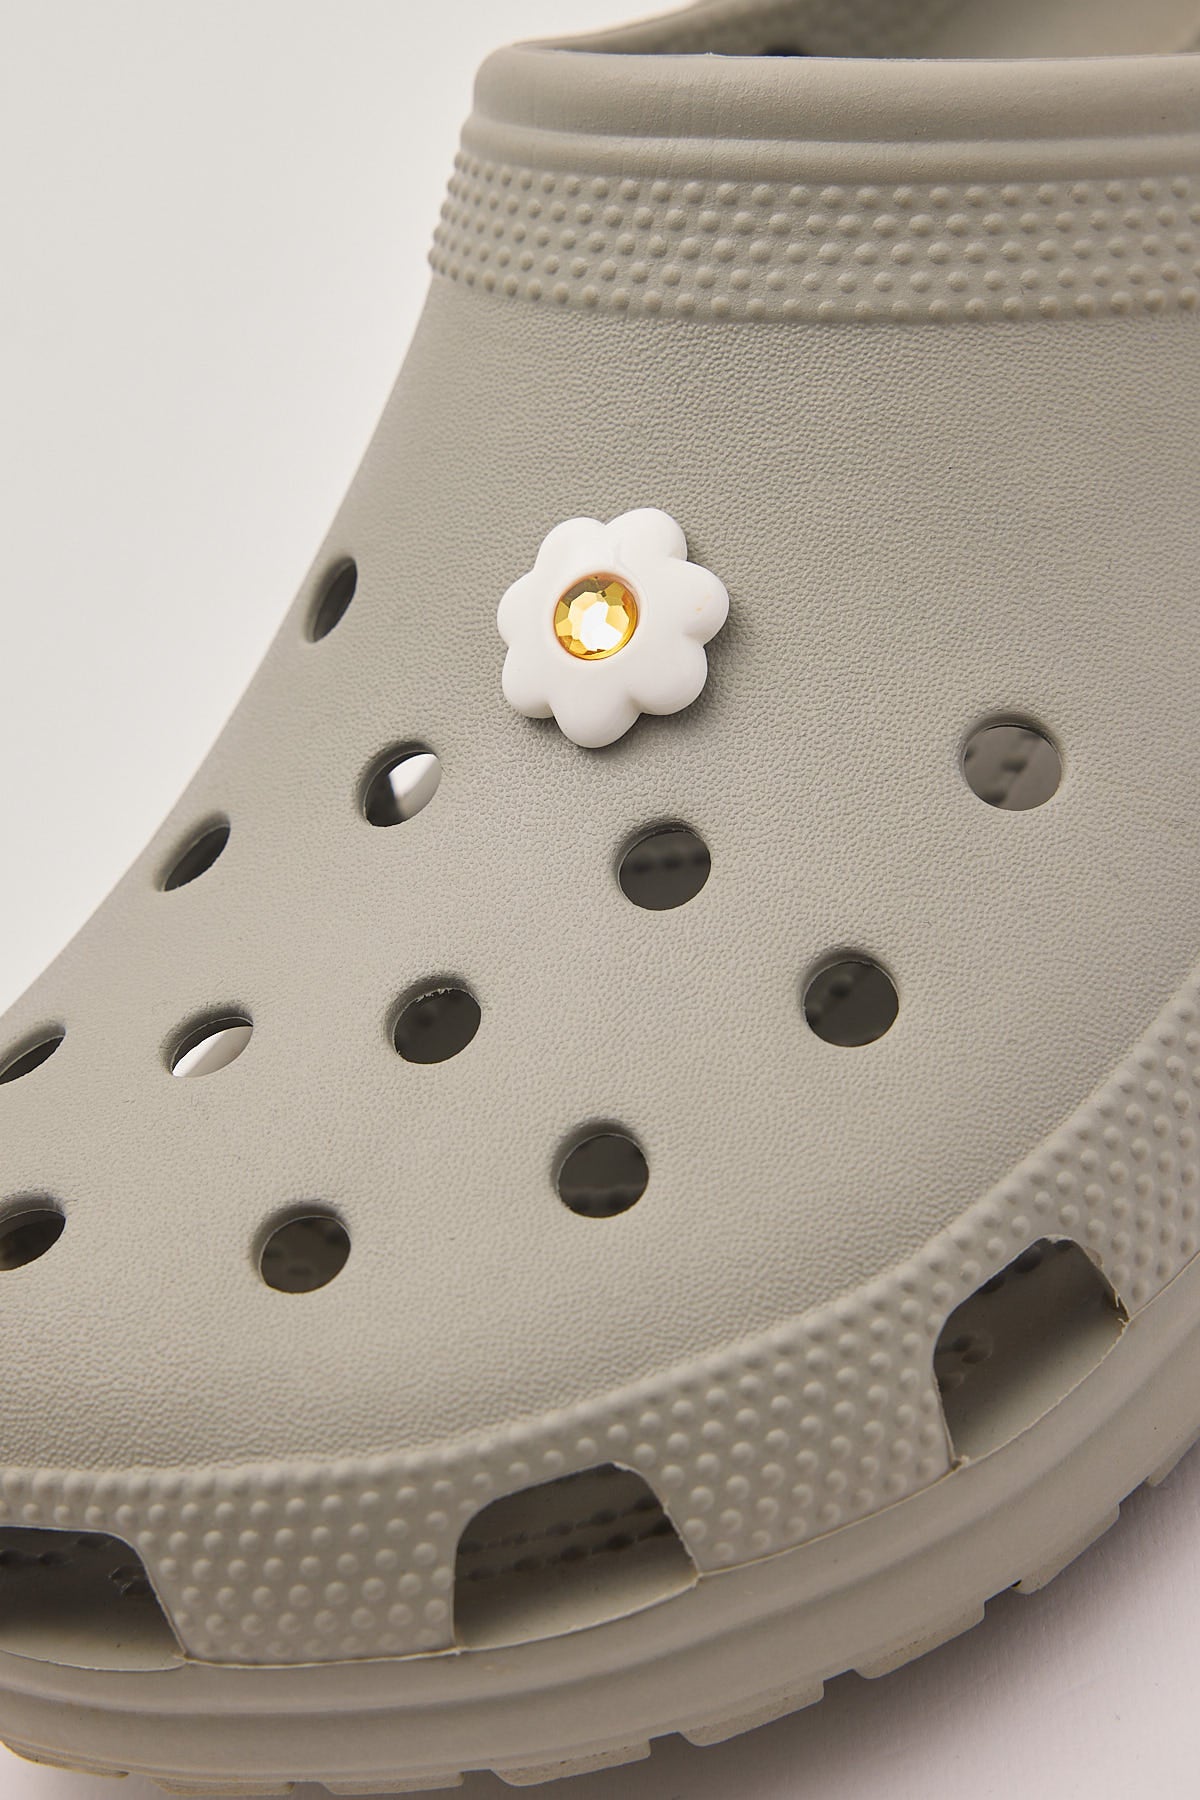 Crocs Tiny White Flower Jibbitz White